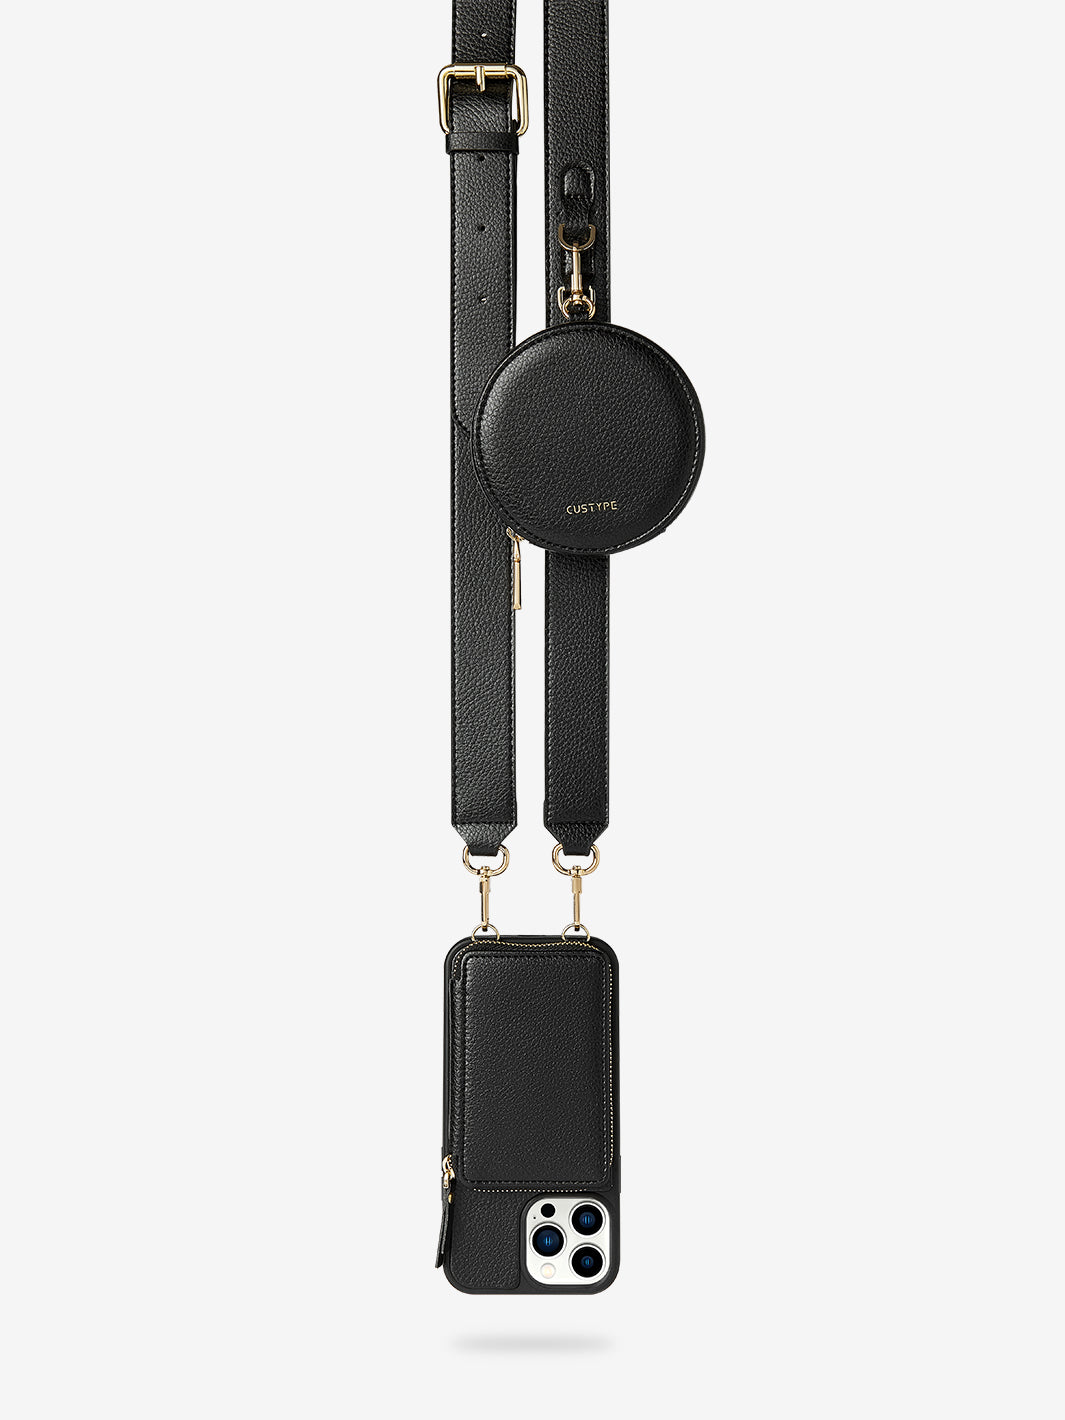 Custype crossbody iPhone case with Round bag black-01